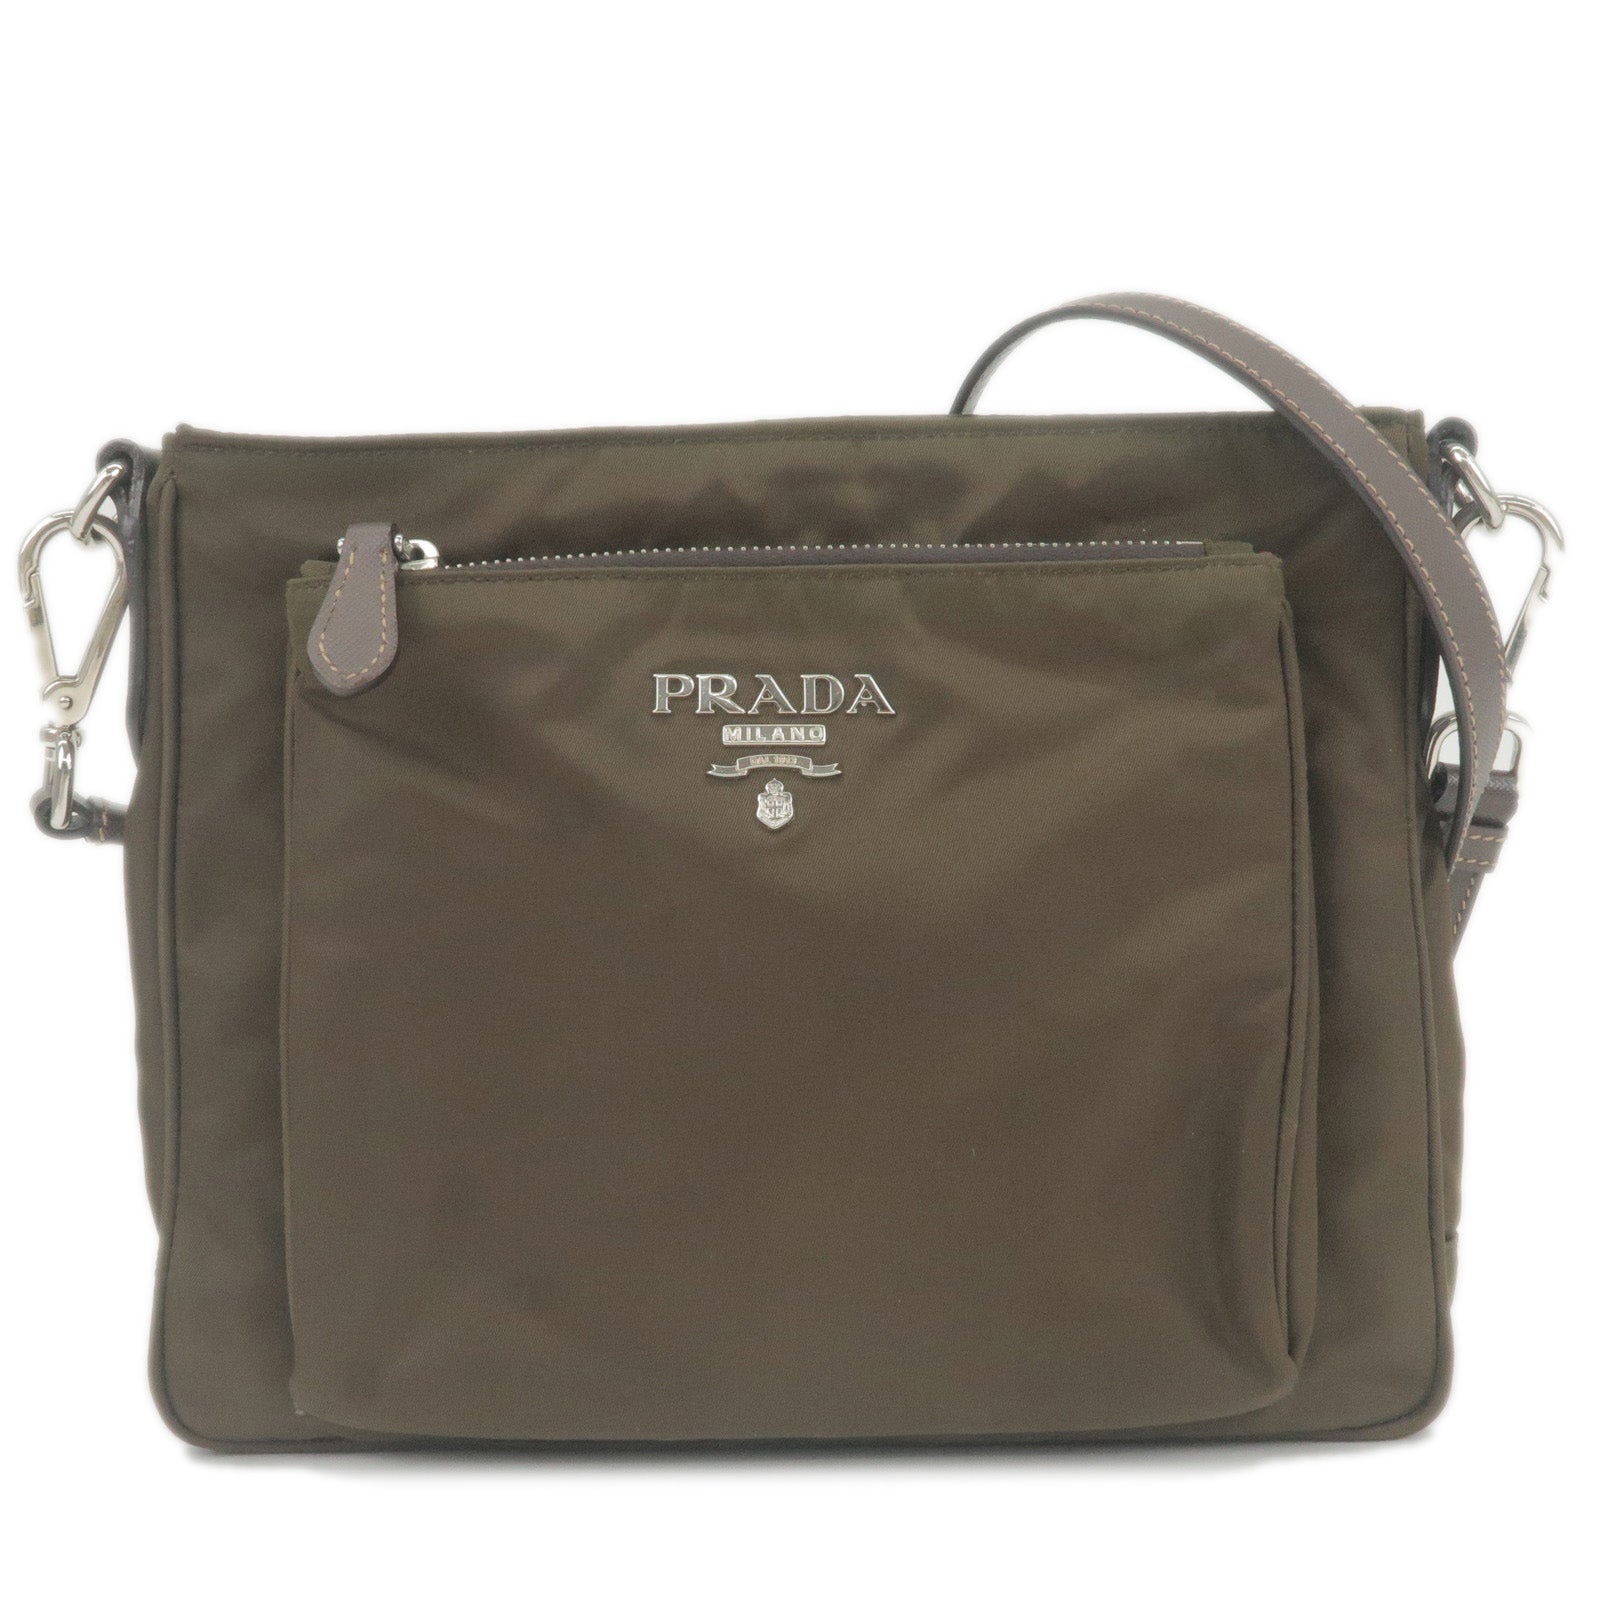 Prada Saffiano Leather Shoulder Bag, Black | Costco